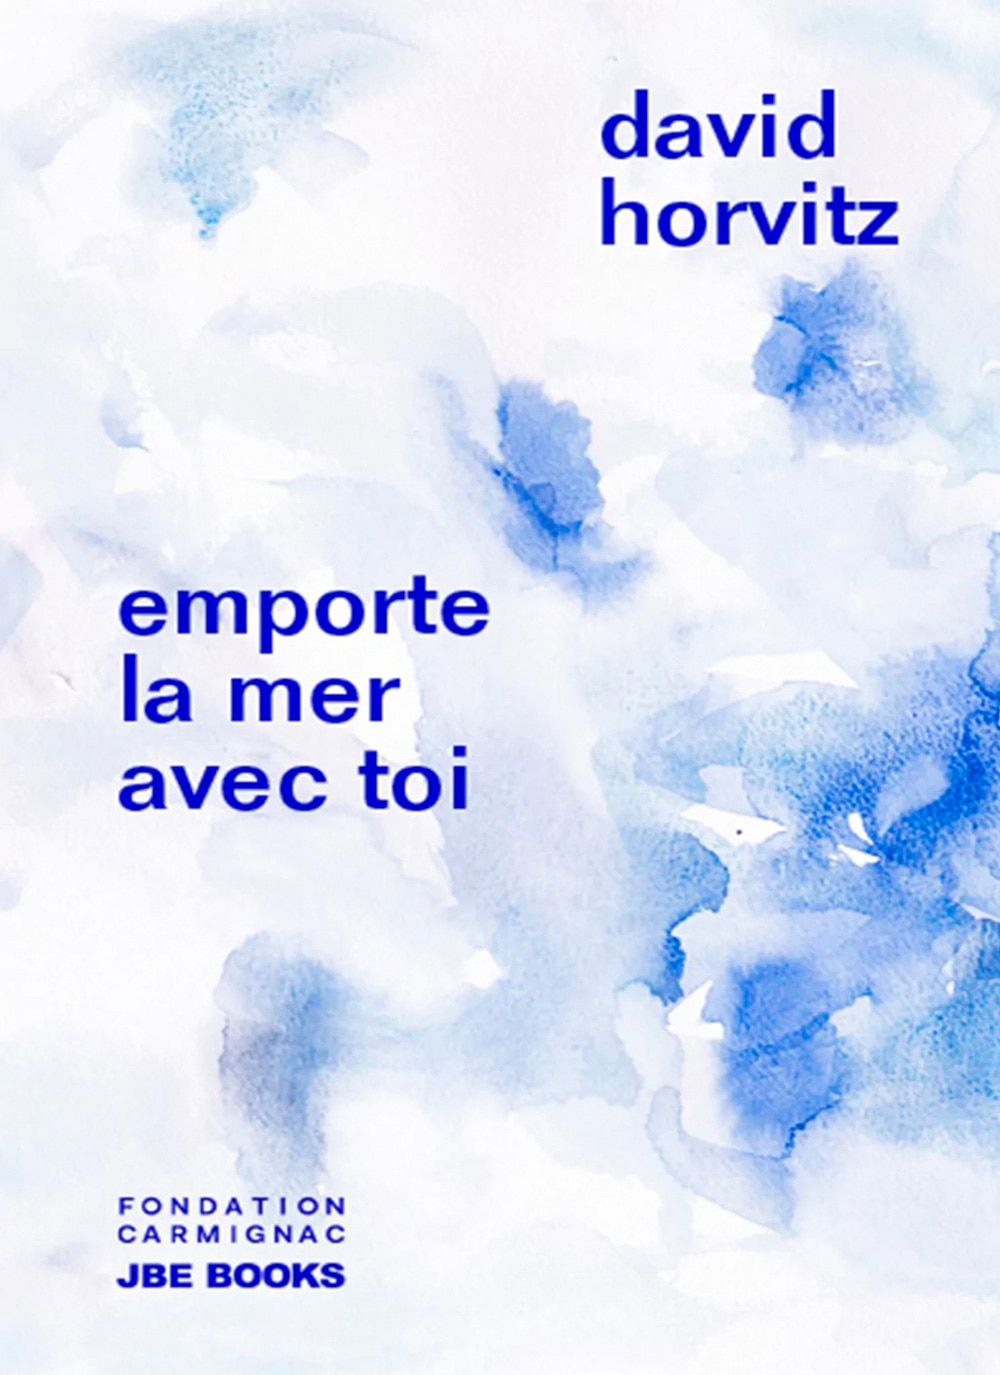 David Horvitz - Emporte la mer avec toi / Adjust the level of the sea 아트북